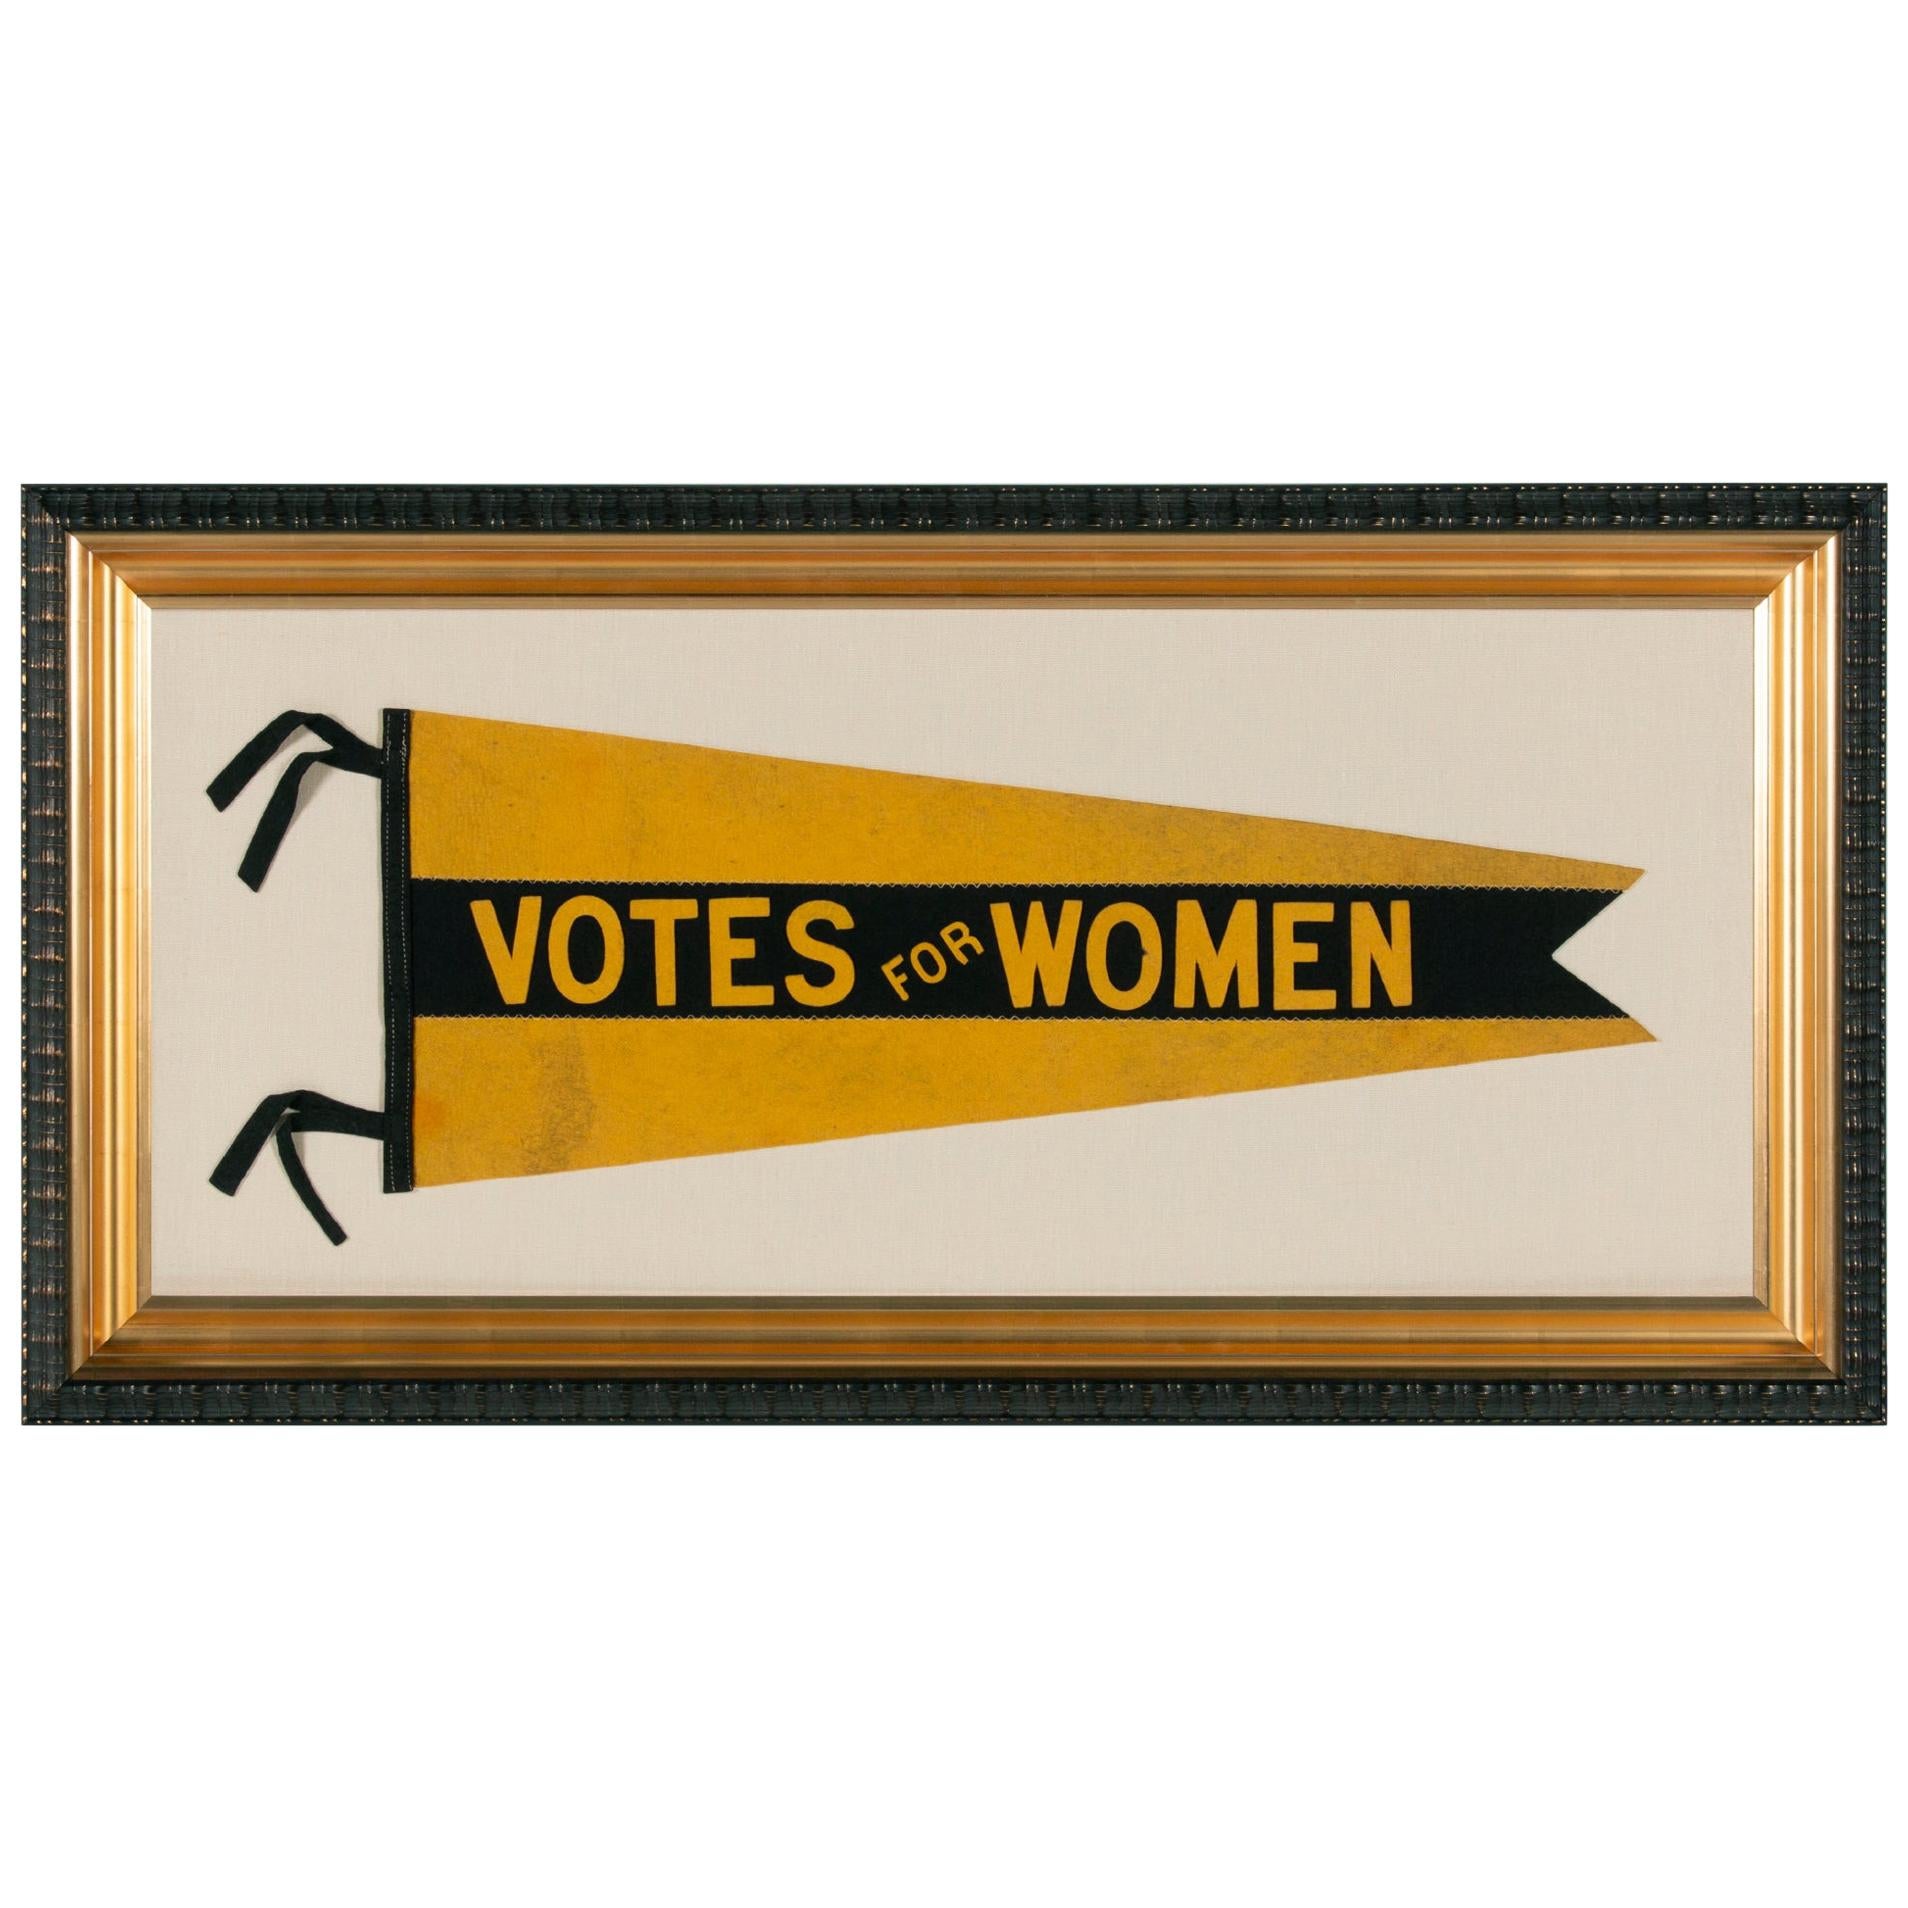 "Votes for Women" Large Swallowtail Pennant, circa 1910-1920